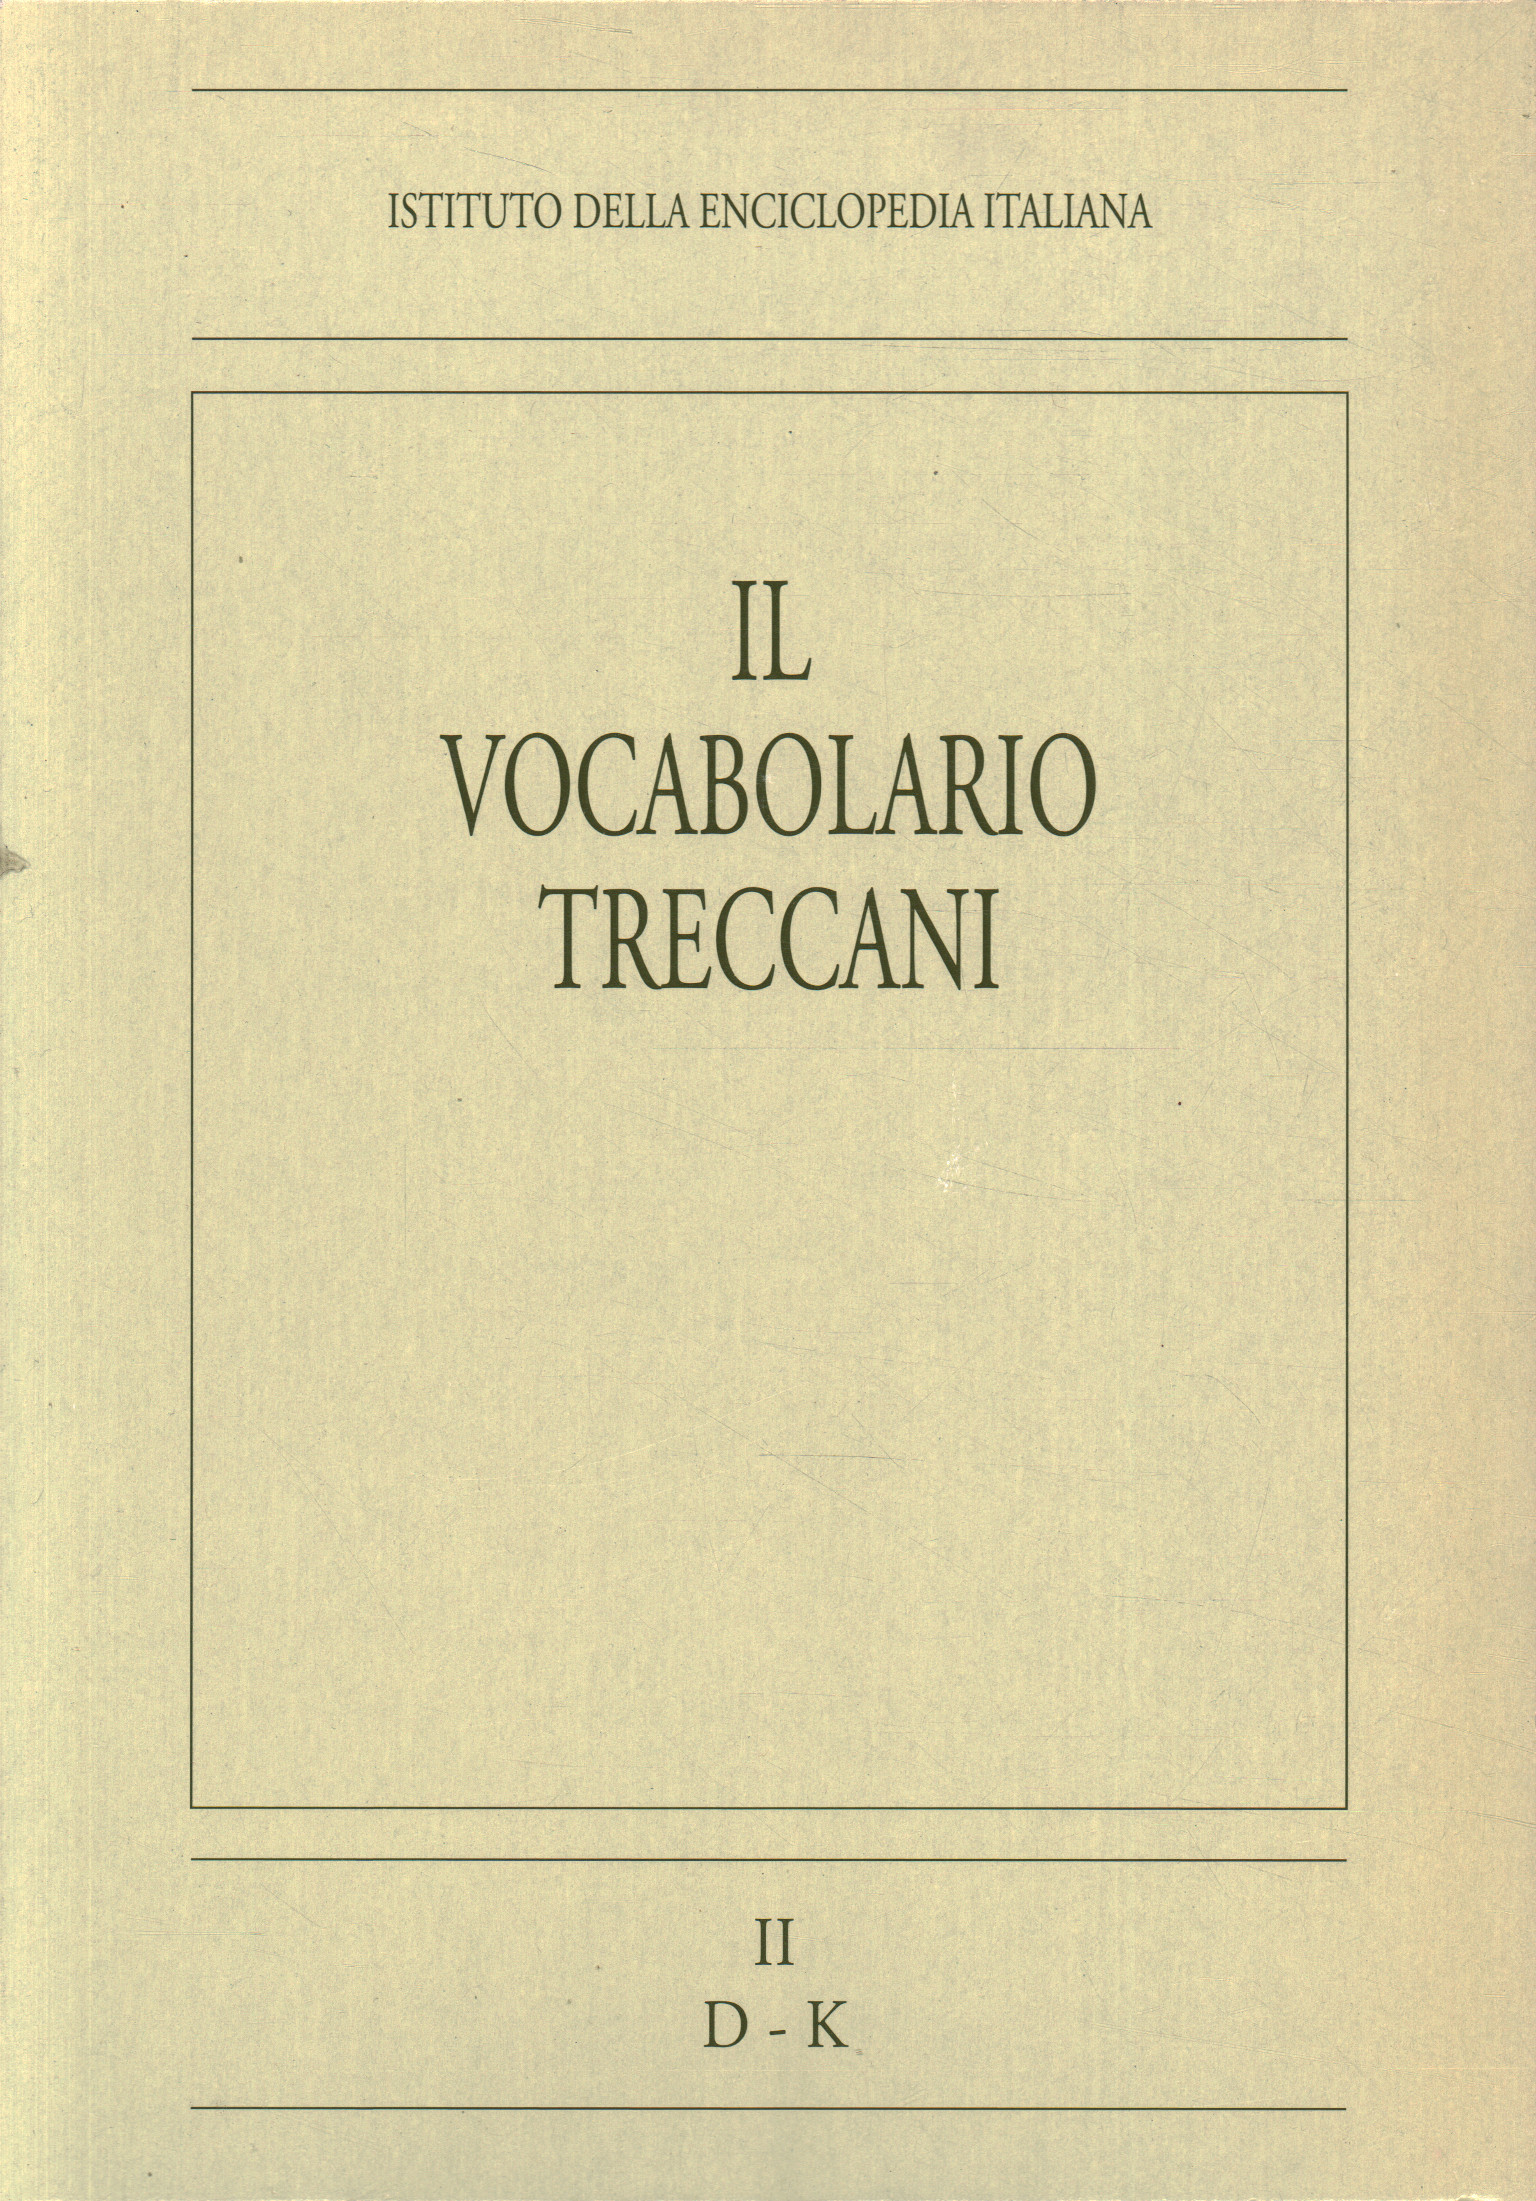 The Treccani vocabulary. D-K (Volume II)